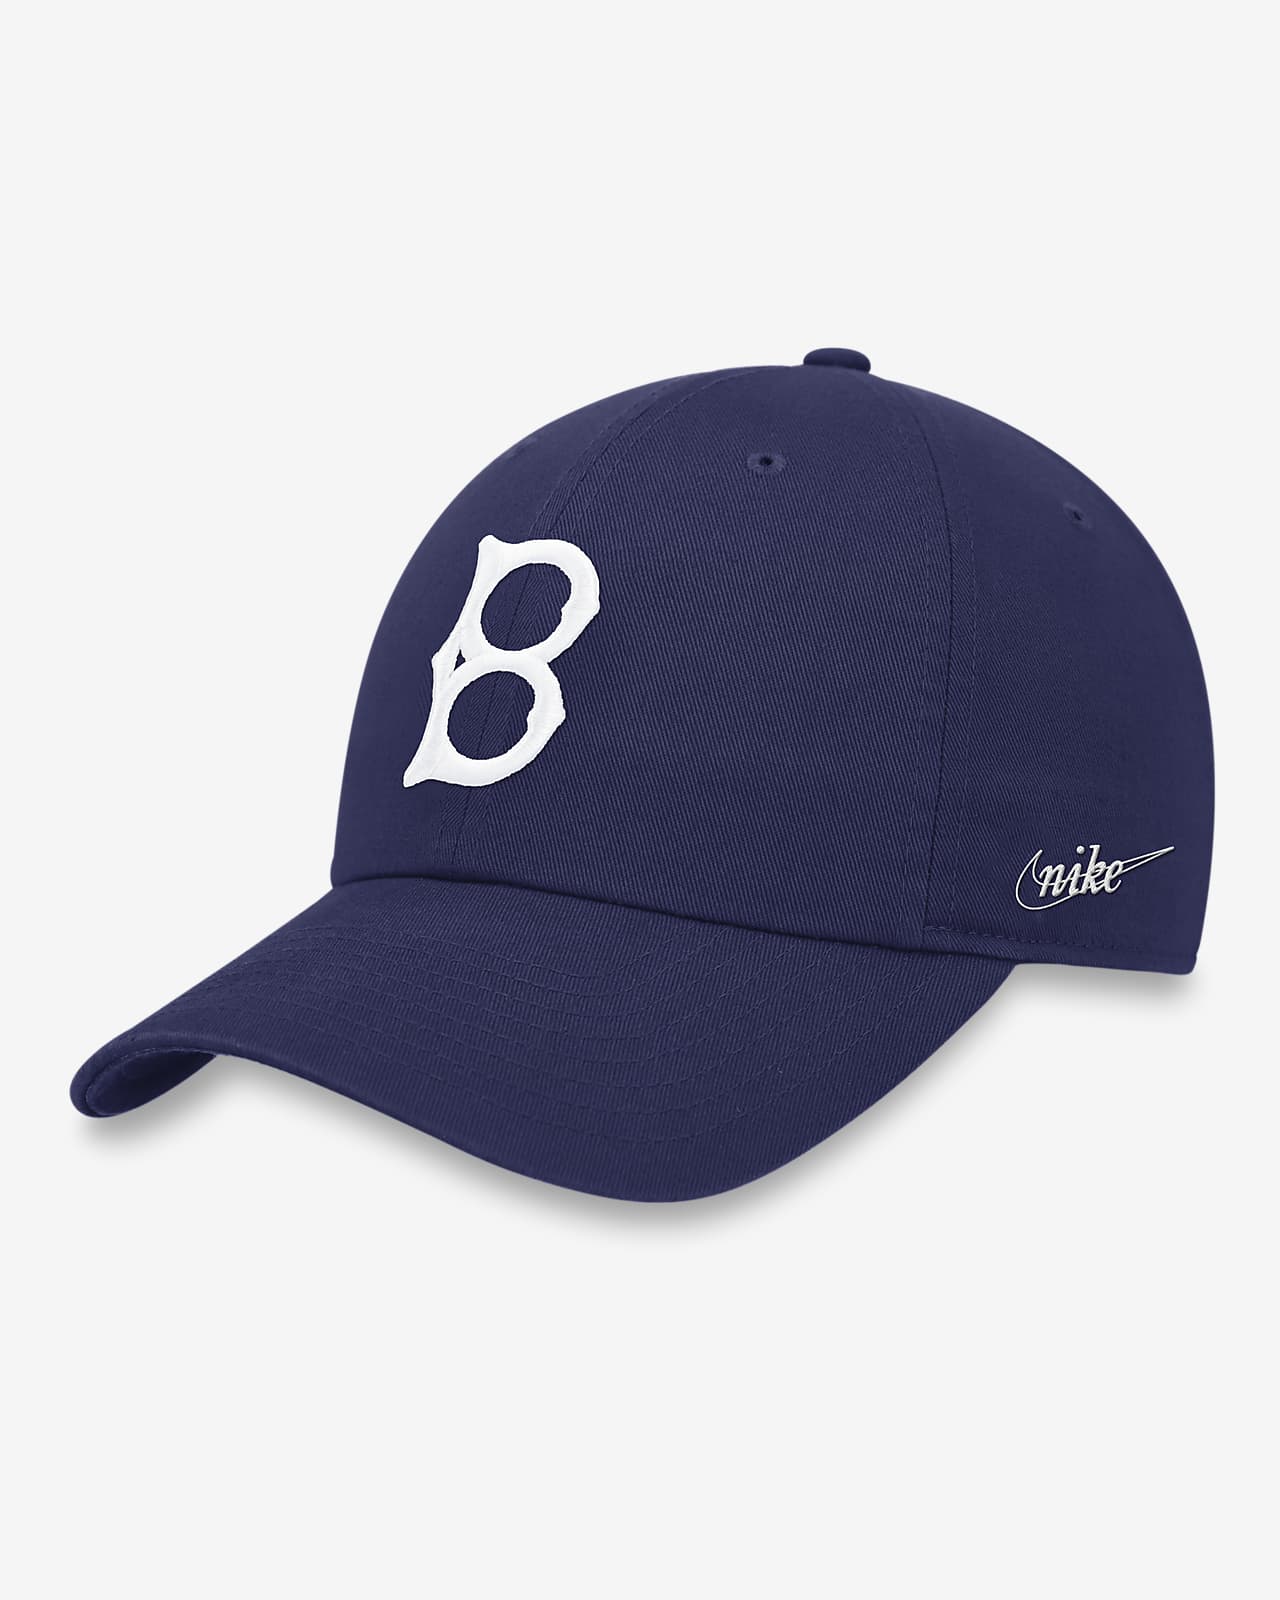 Nike Brooklyn Dodgers MLB Fan Shop